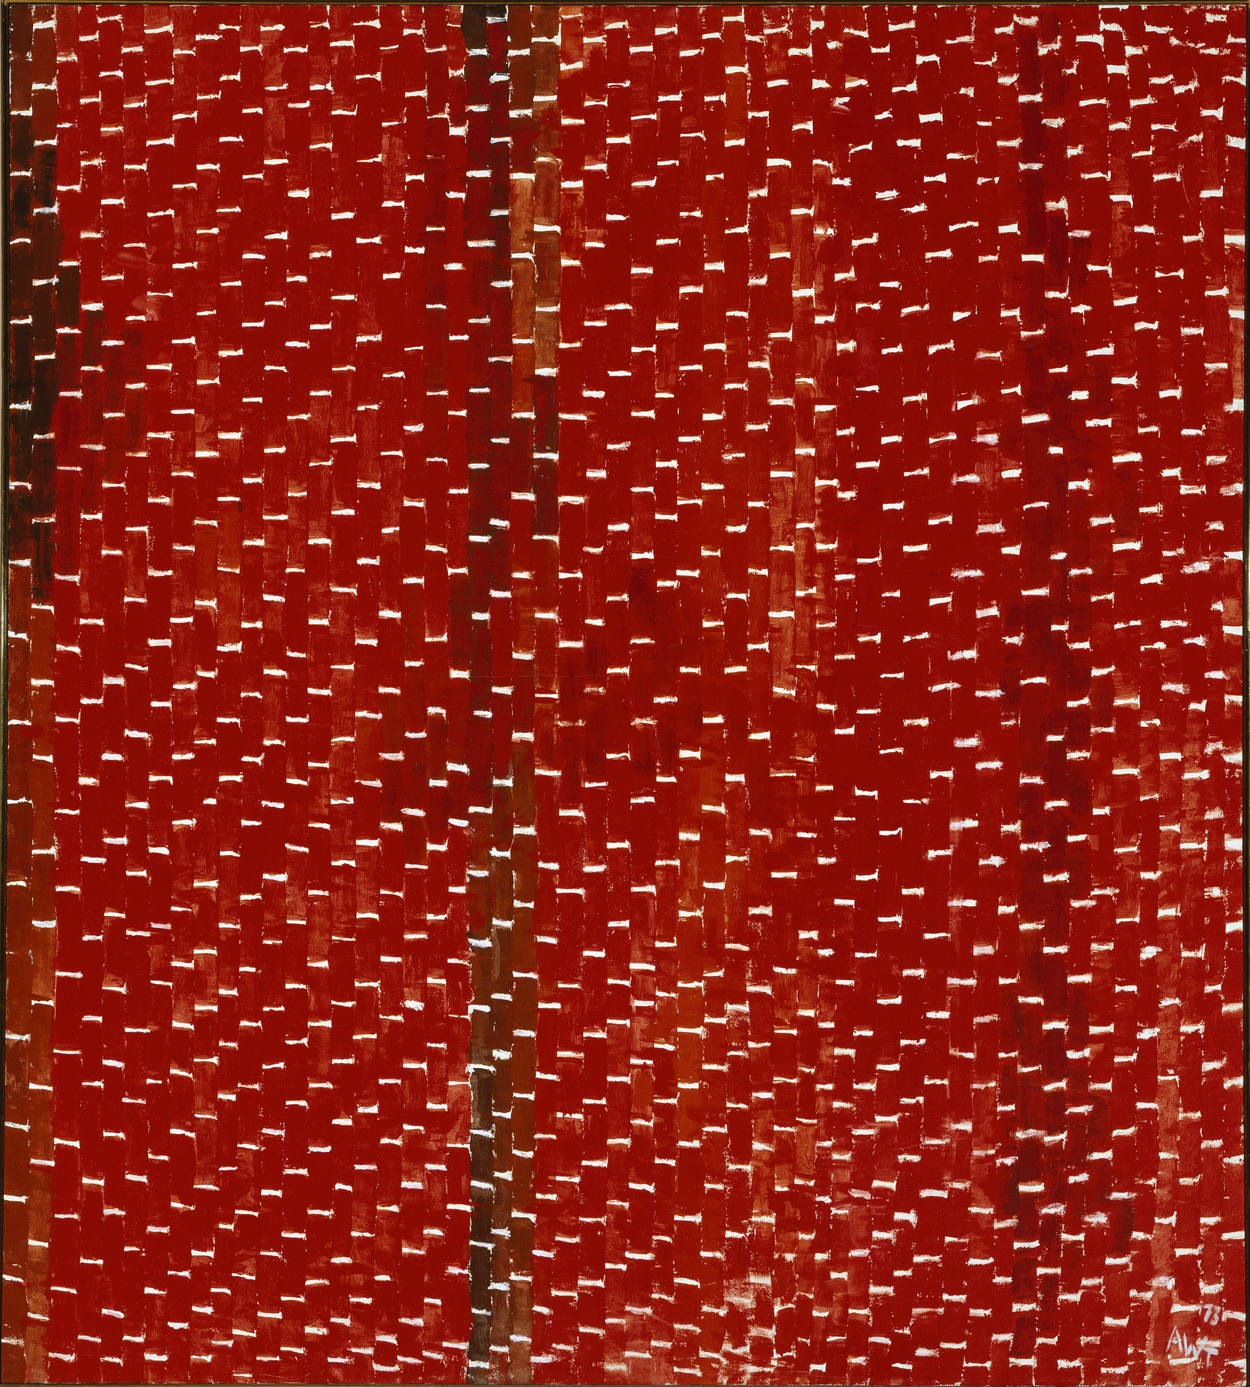 獵戶星座 by Alma Woodsey Thomas - 1973 - 59 3/4 x 54 in. 